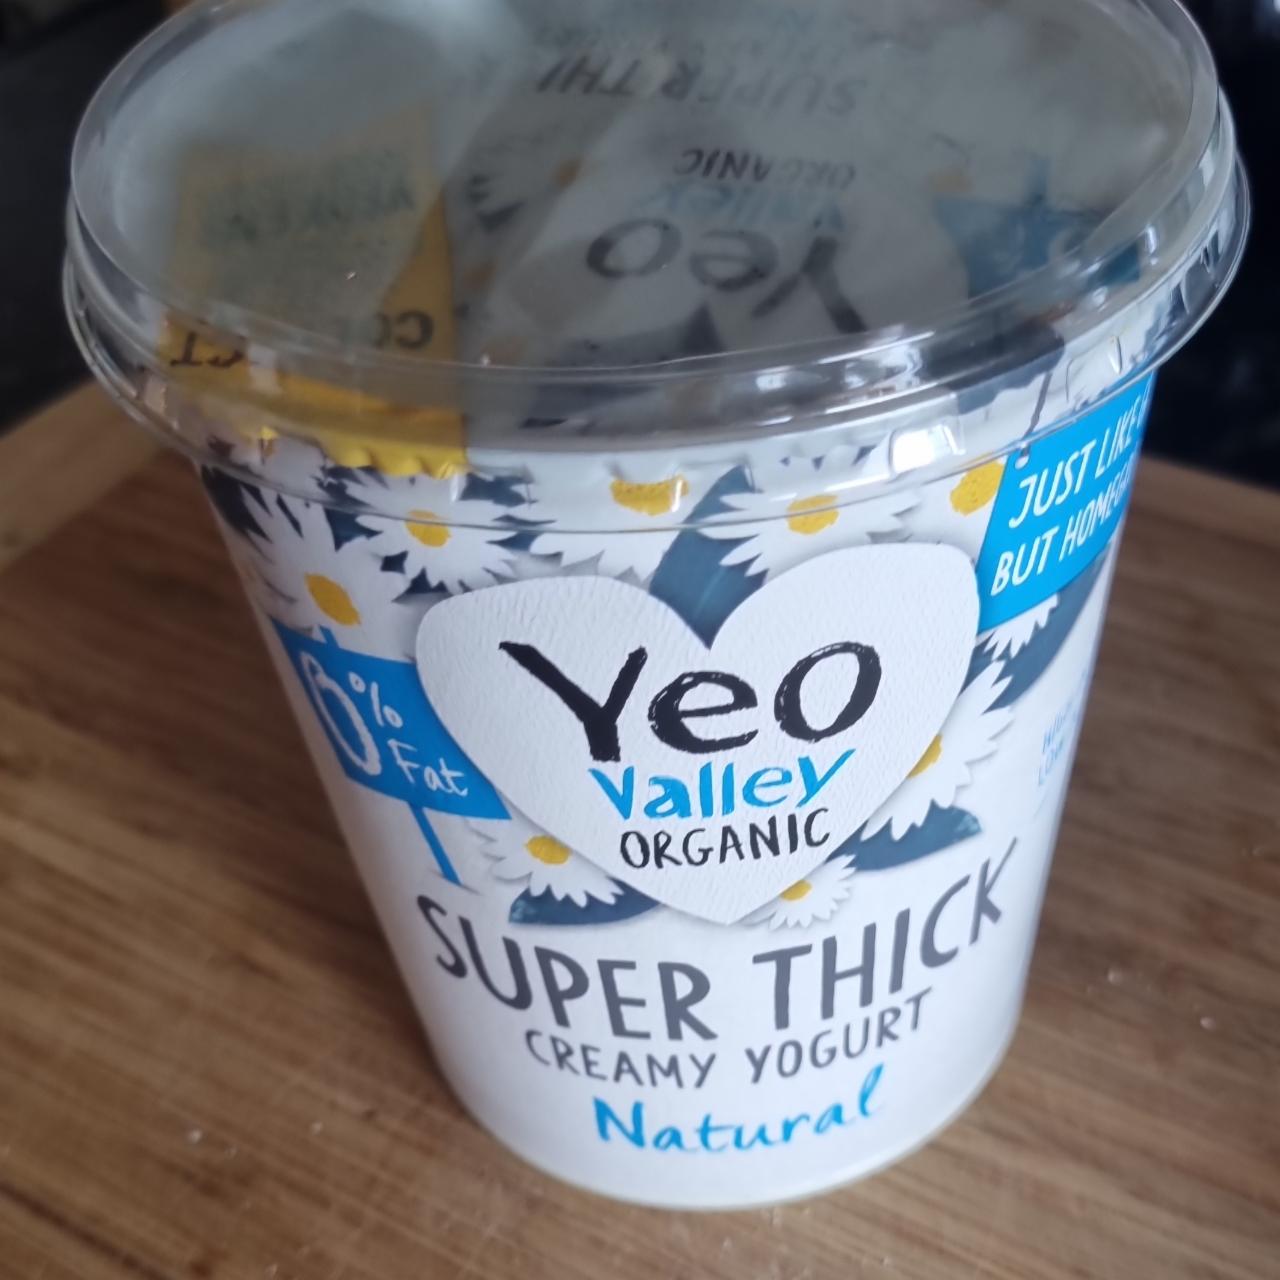 Fotografie - Super Thick Creamy Yogurt Natural 0% Fat Yeo Valley Organic